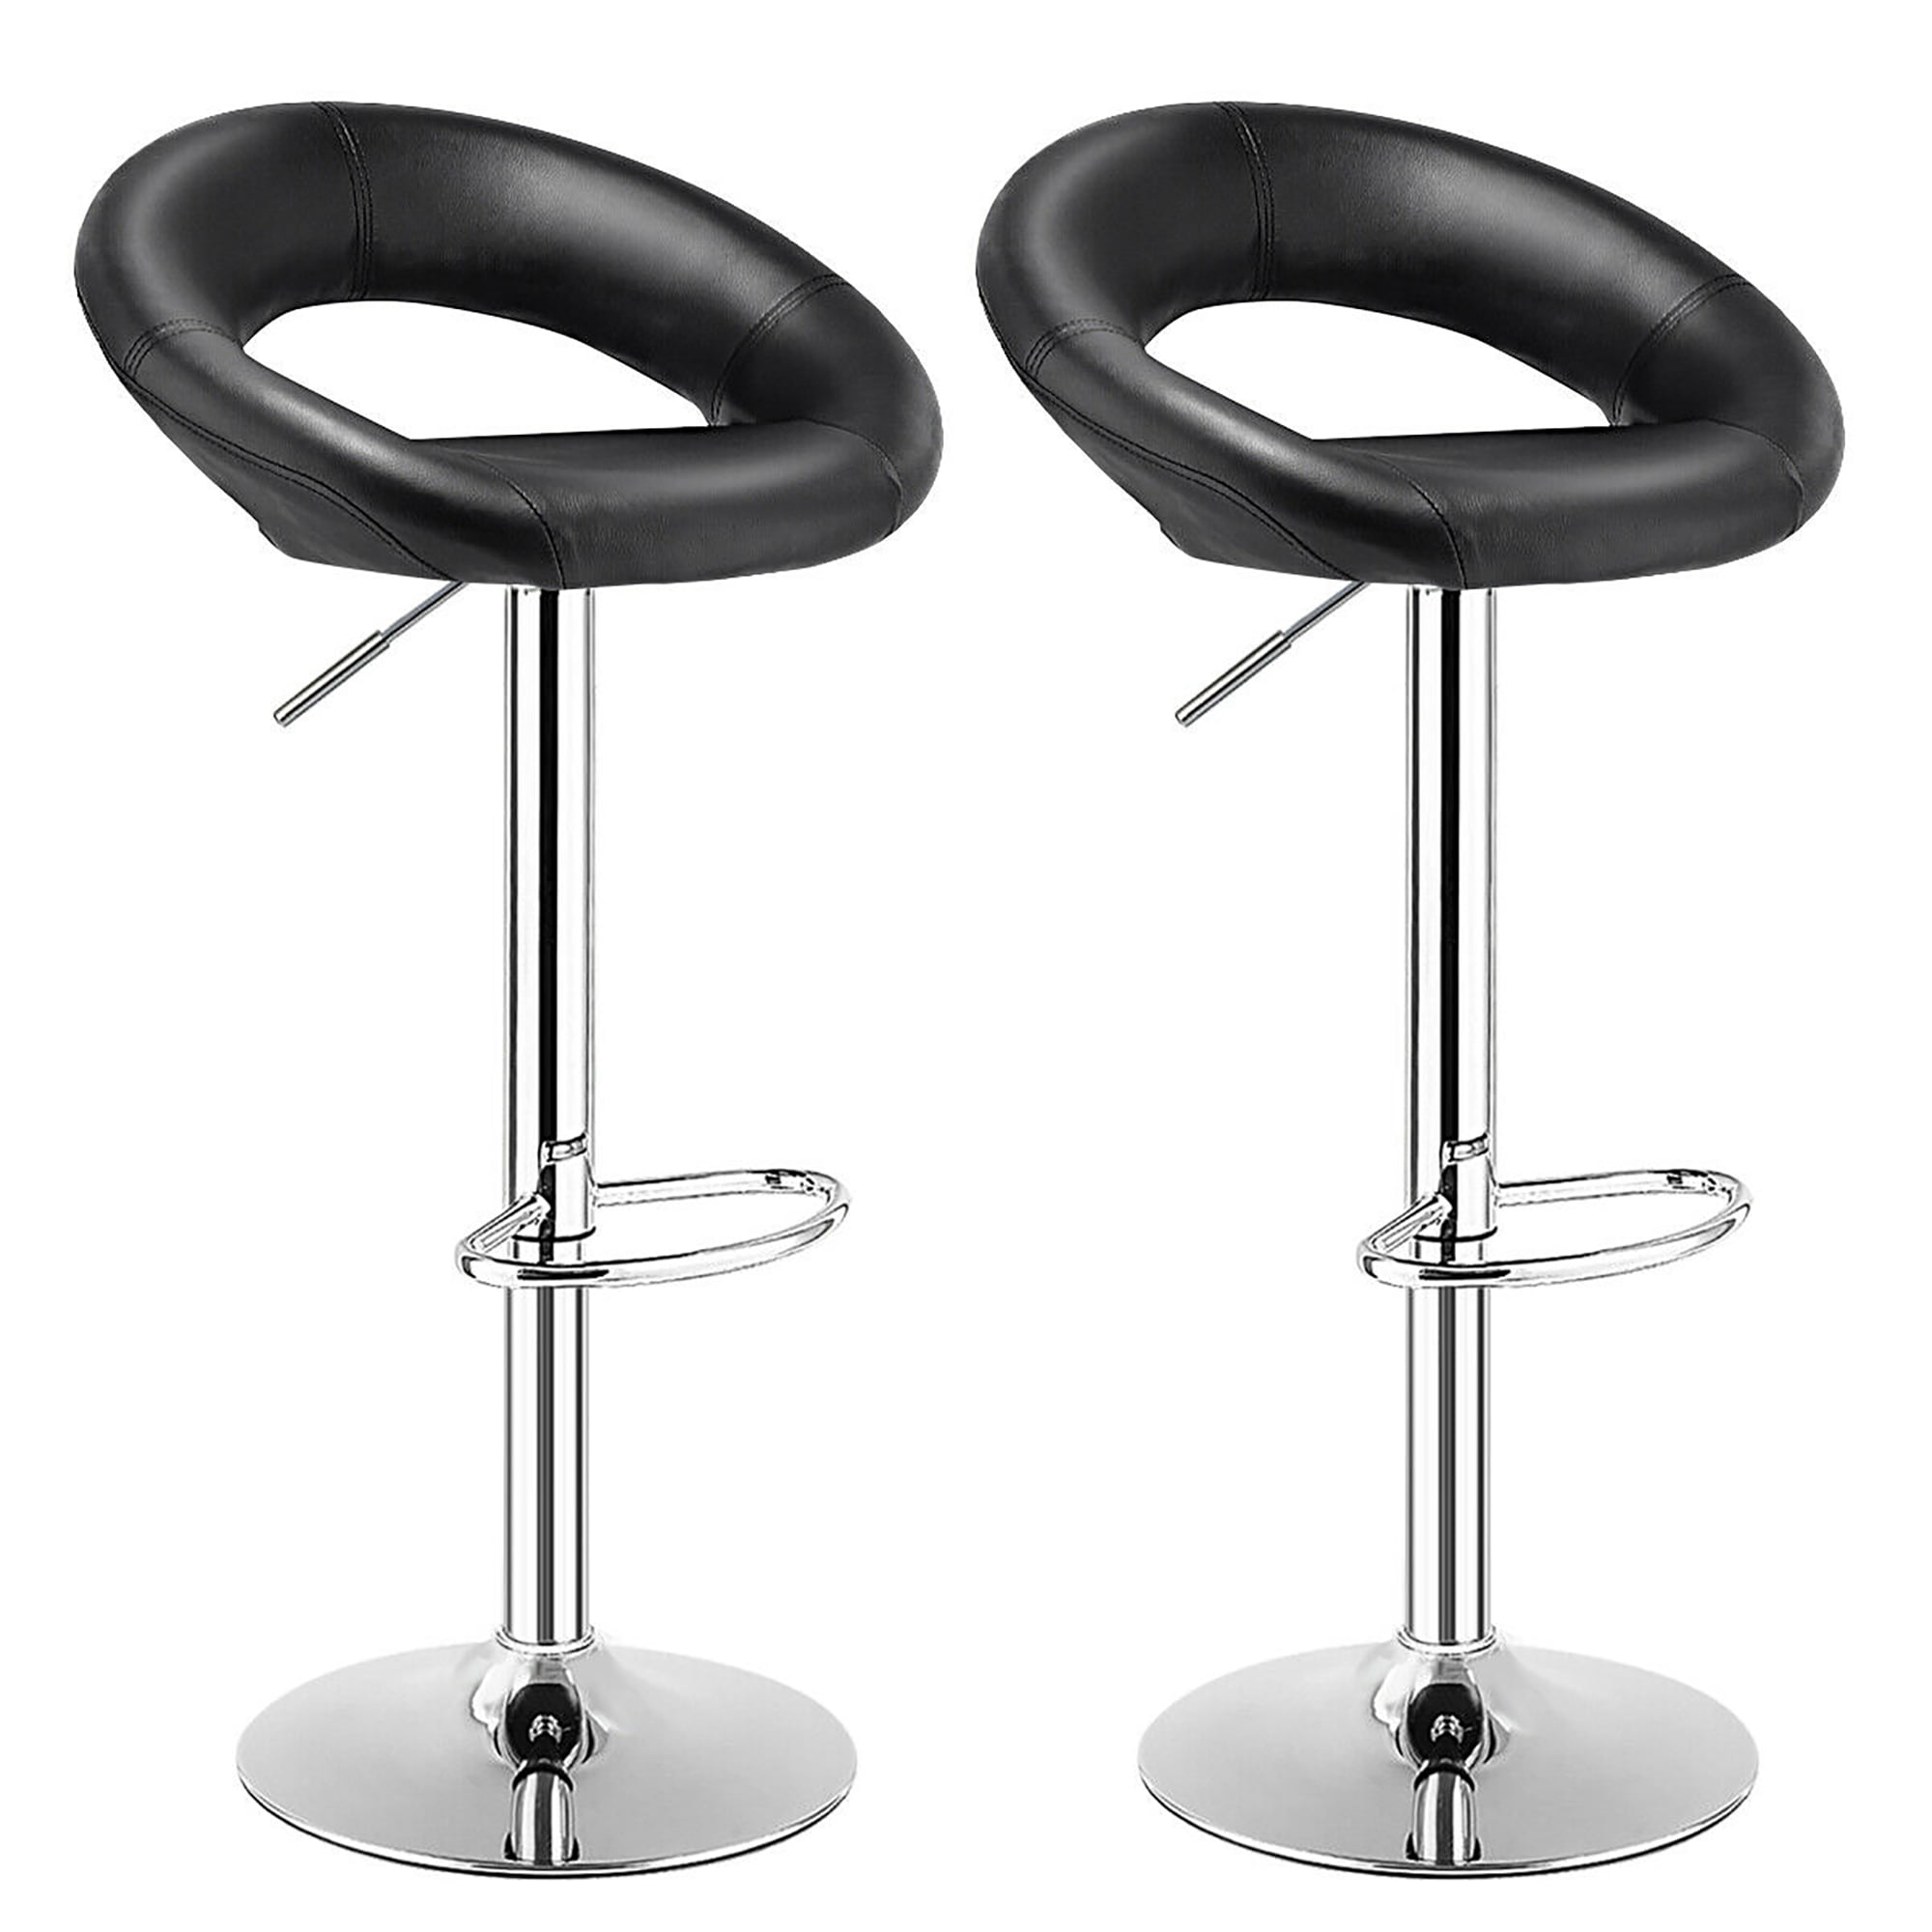 1/2 X Coffee Bar Stool Pub Kitchen 360°Swivel Breakfast Adjustable Height Chairs 